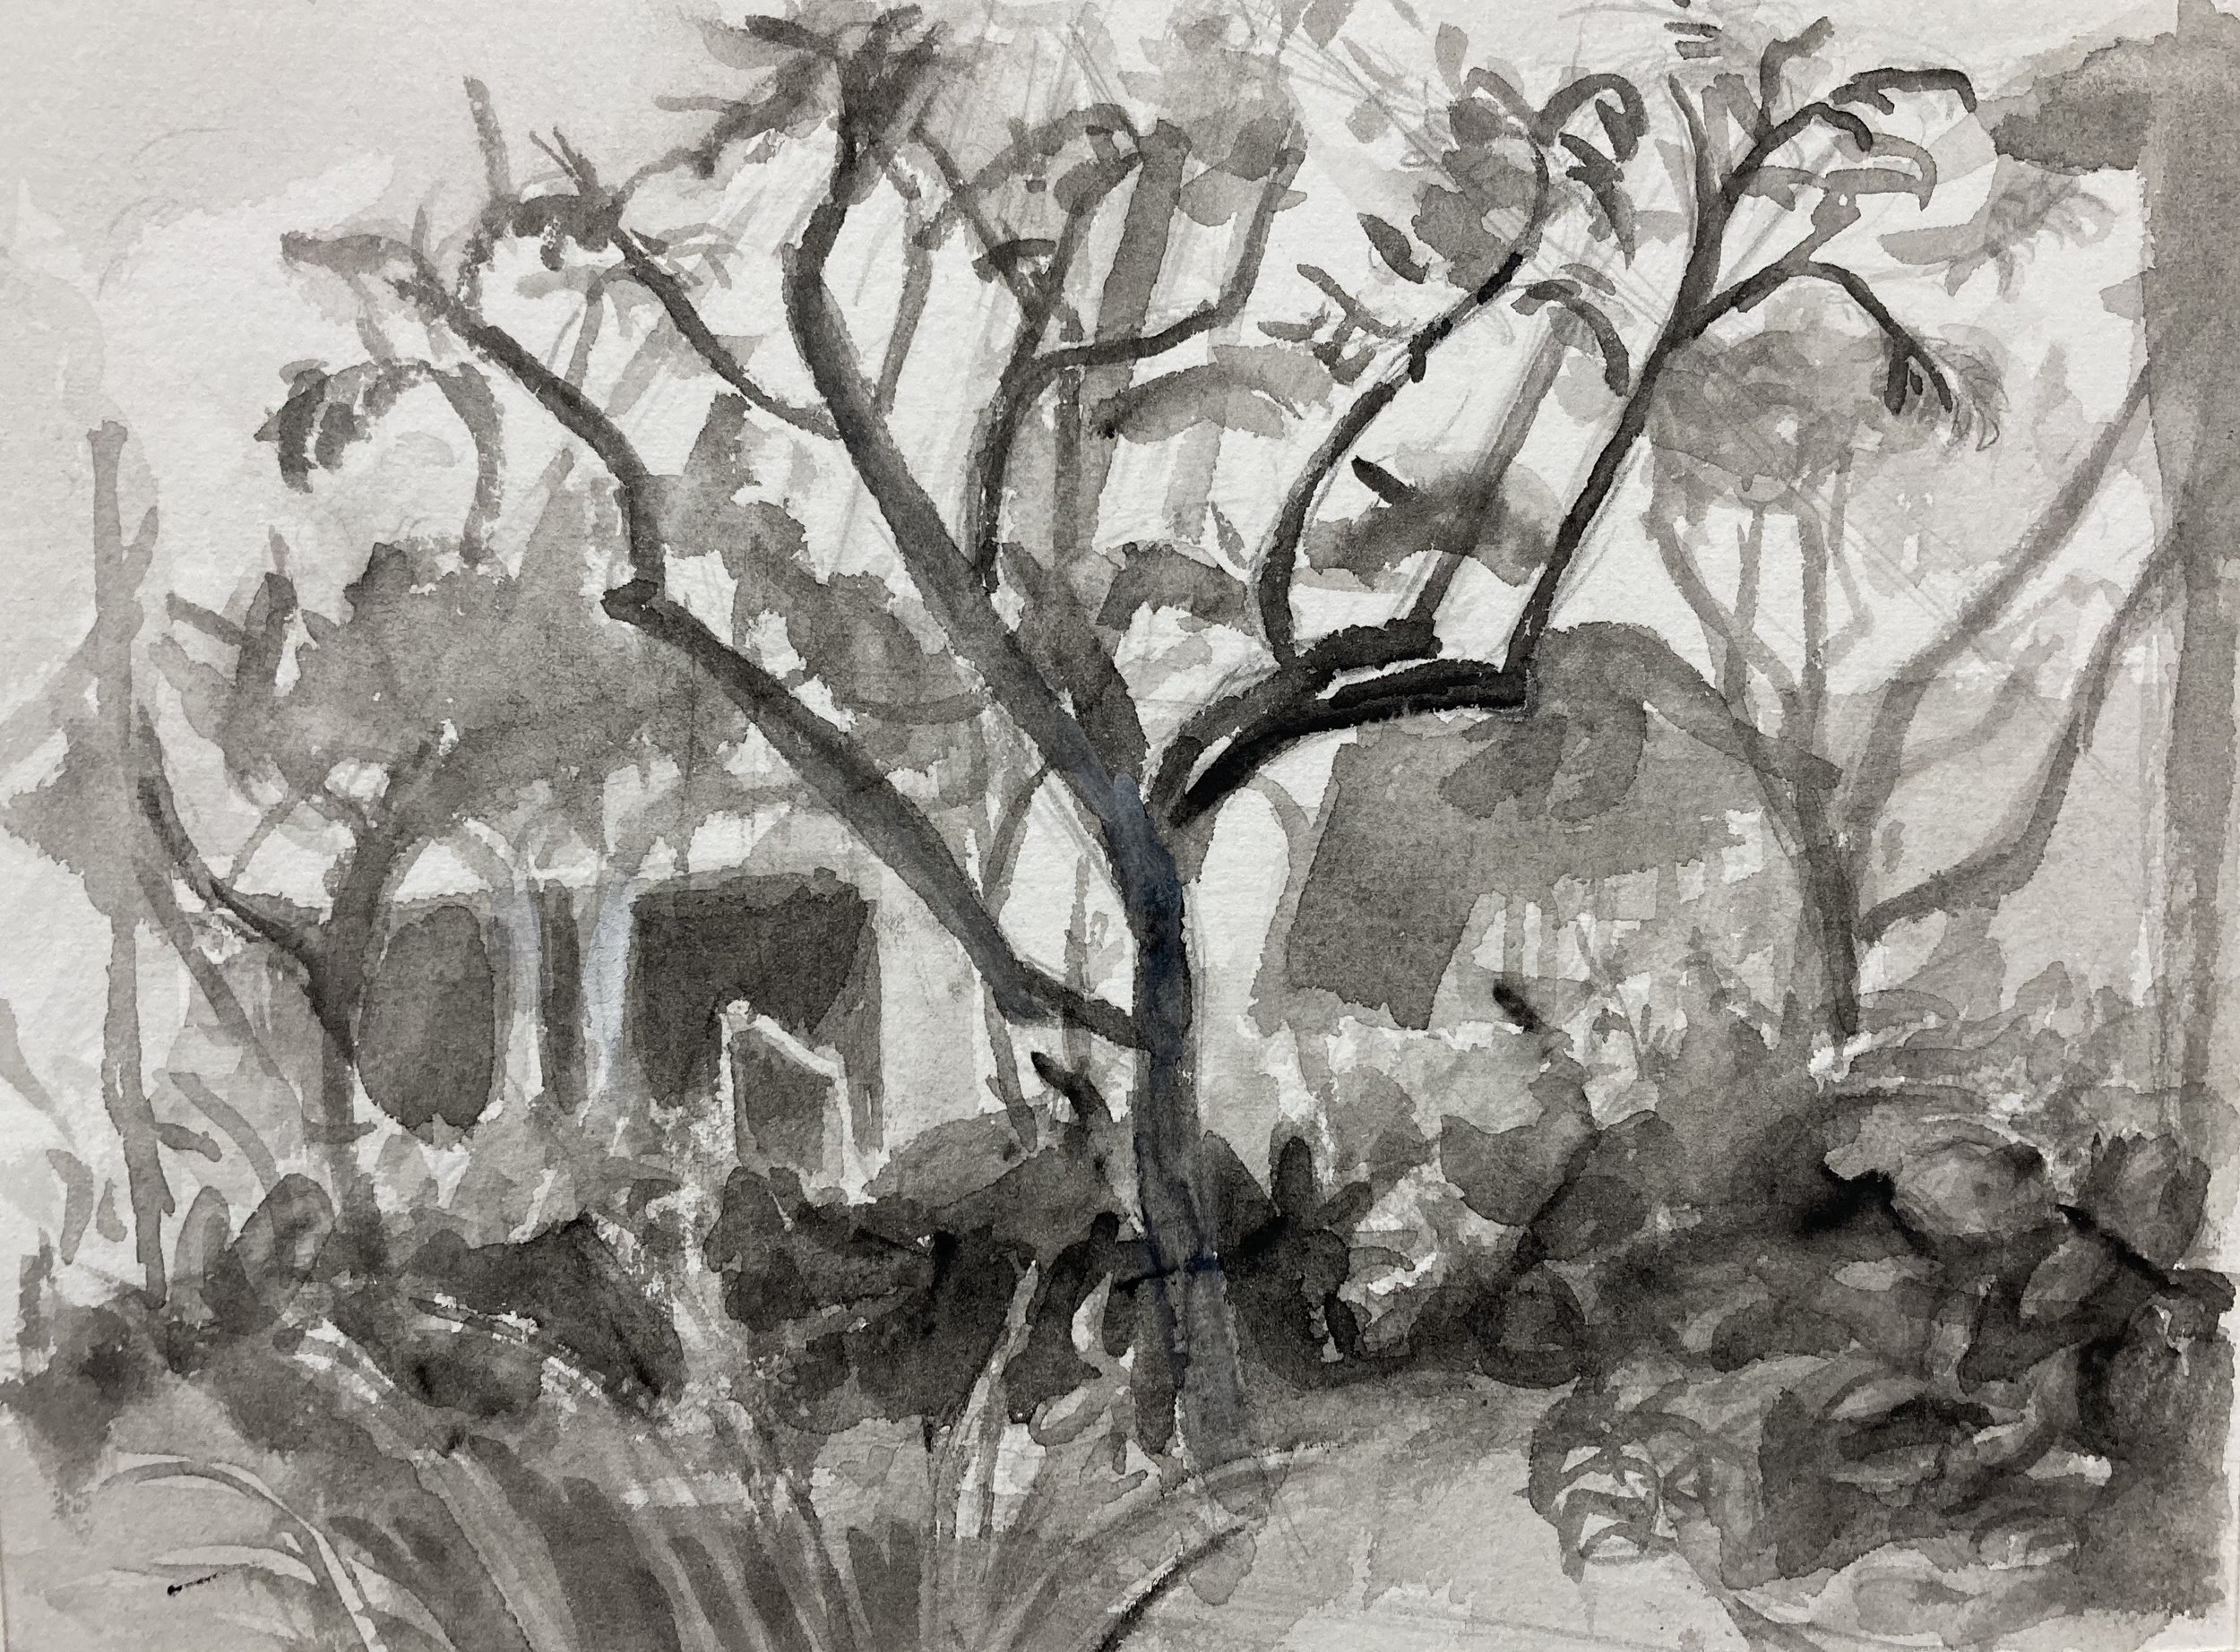 Chapel through trees